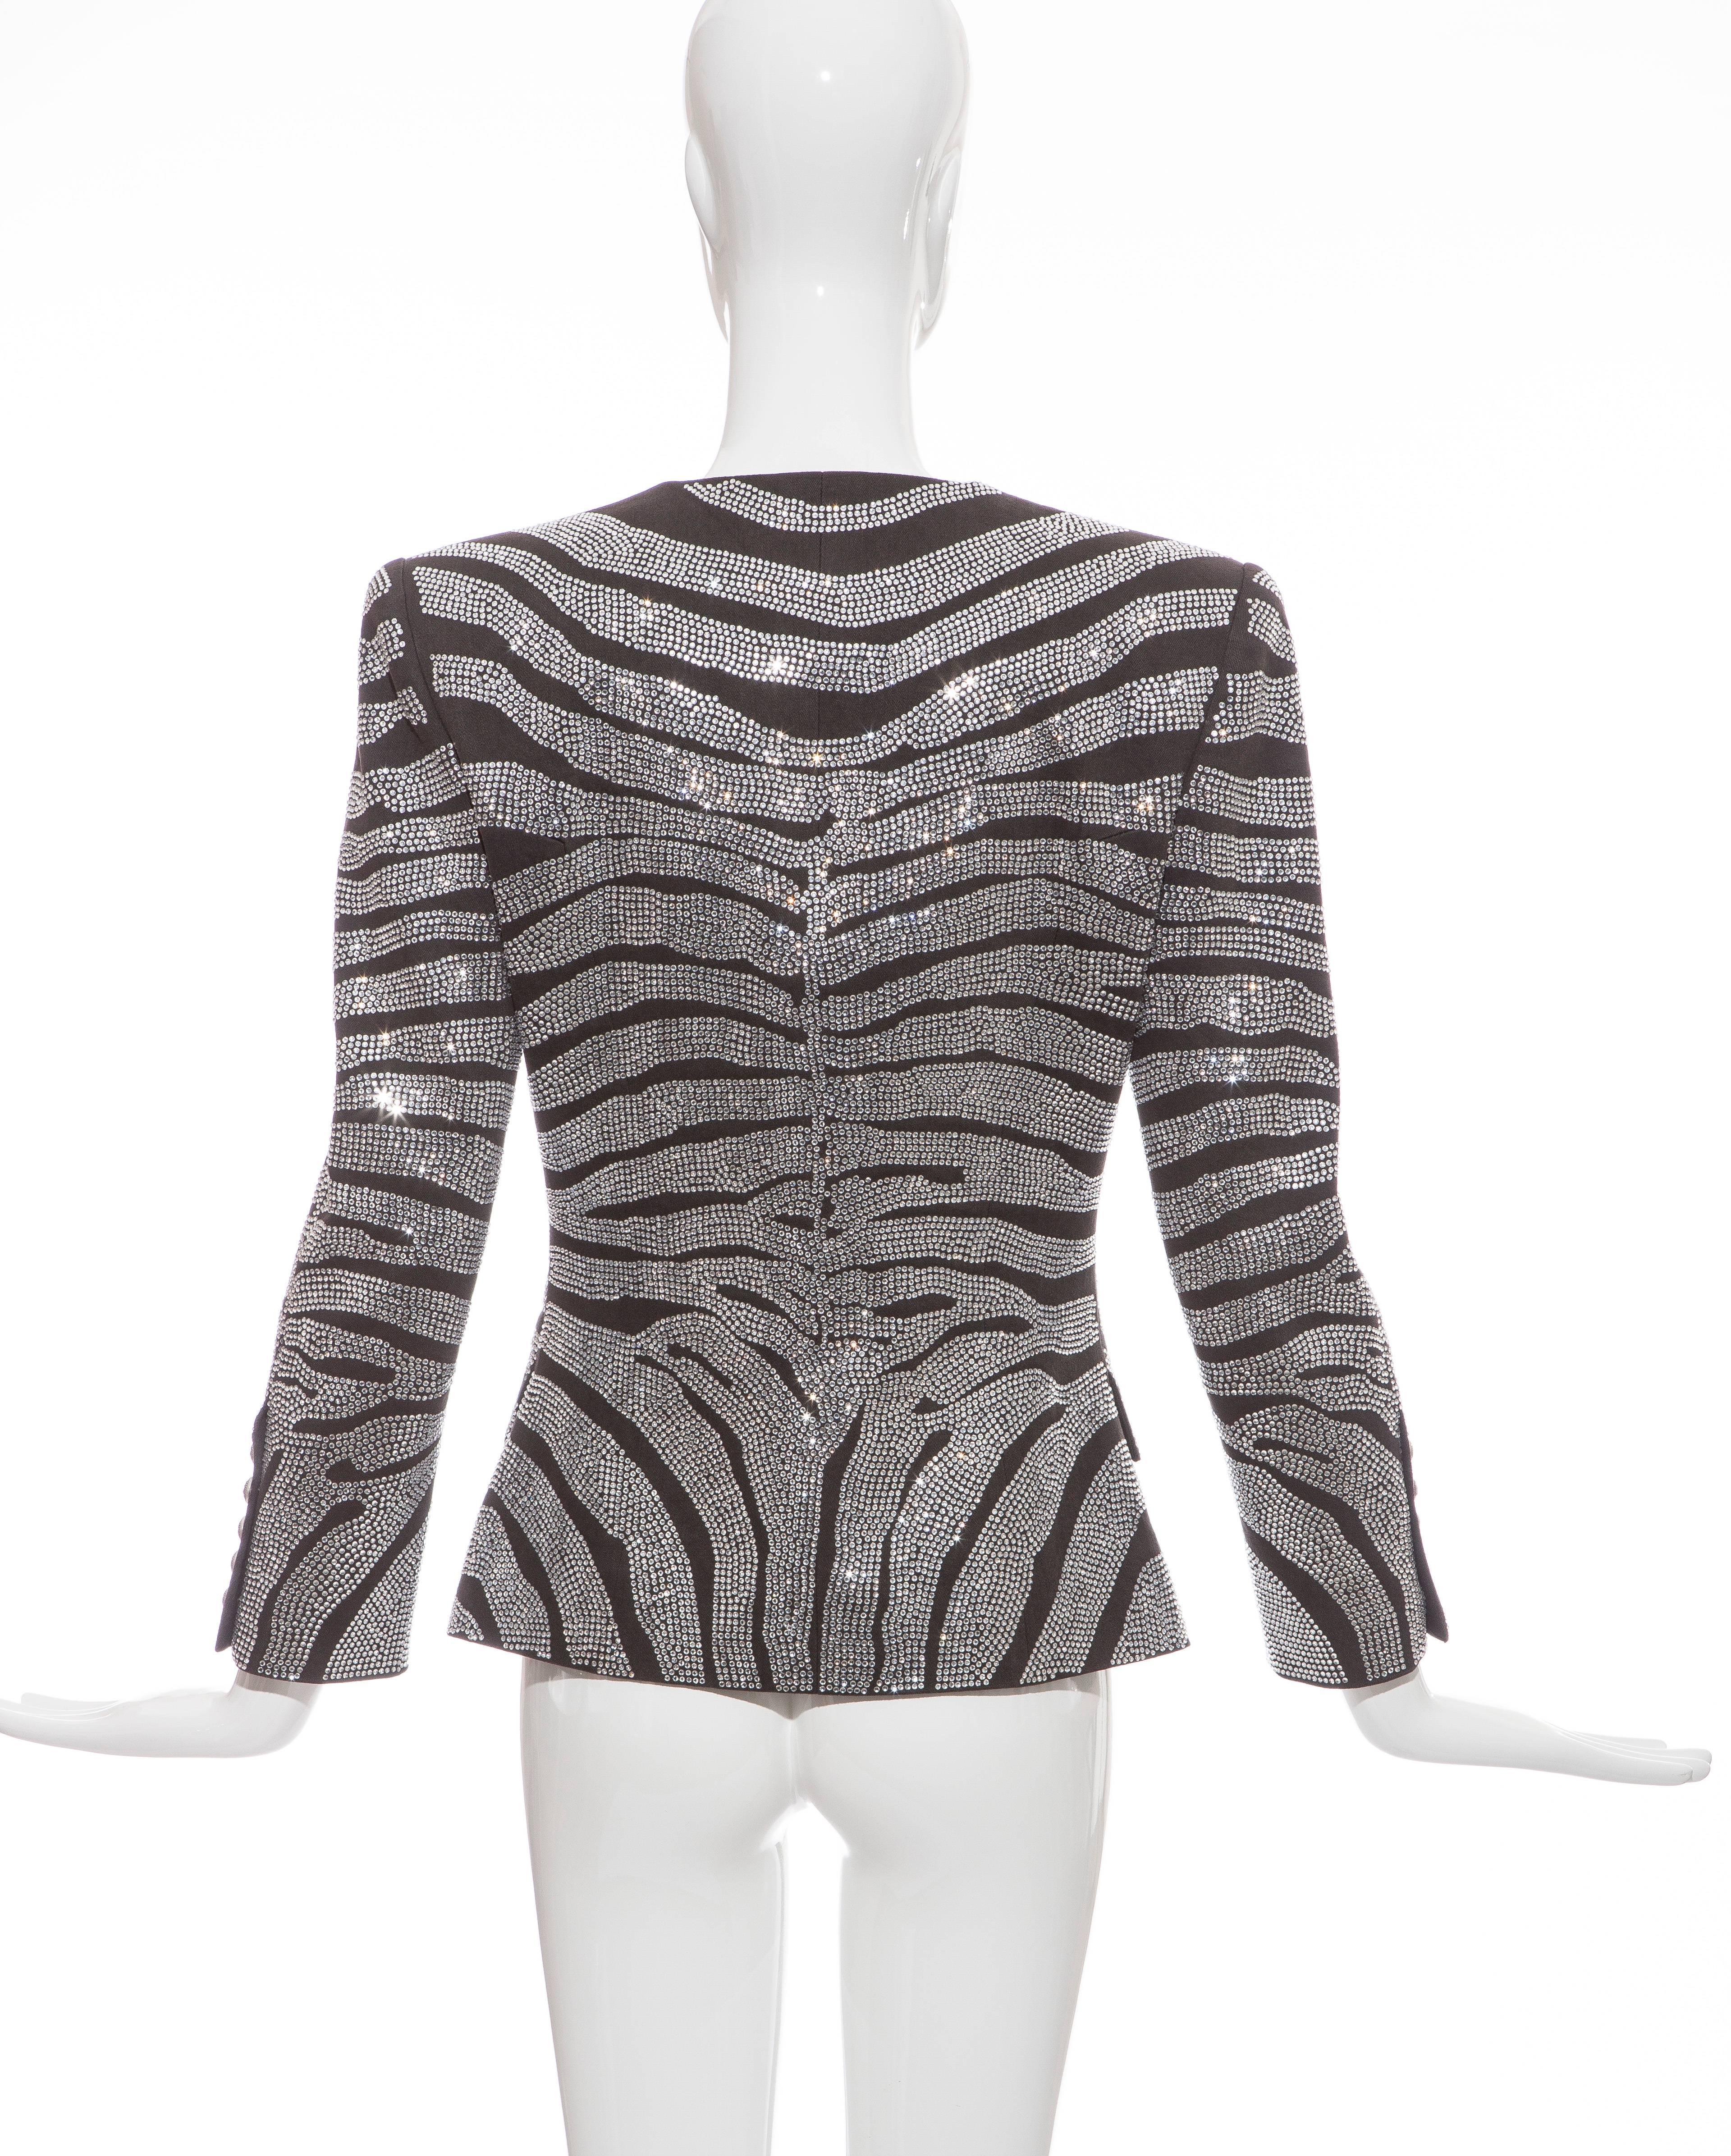 Black Balmain Crystal Embellished Zebra Print Jacket, Pre-Fall 2014